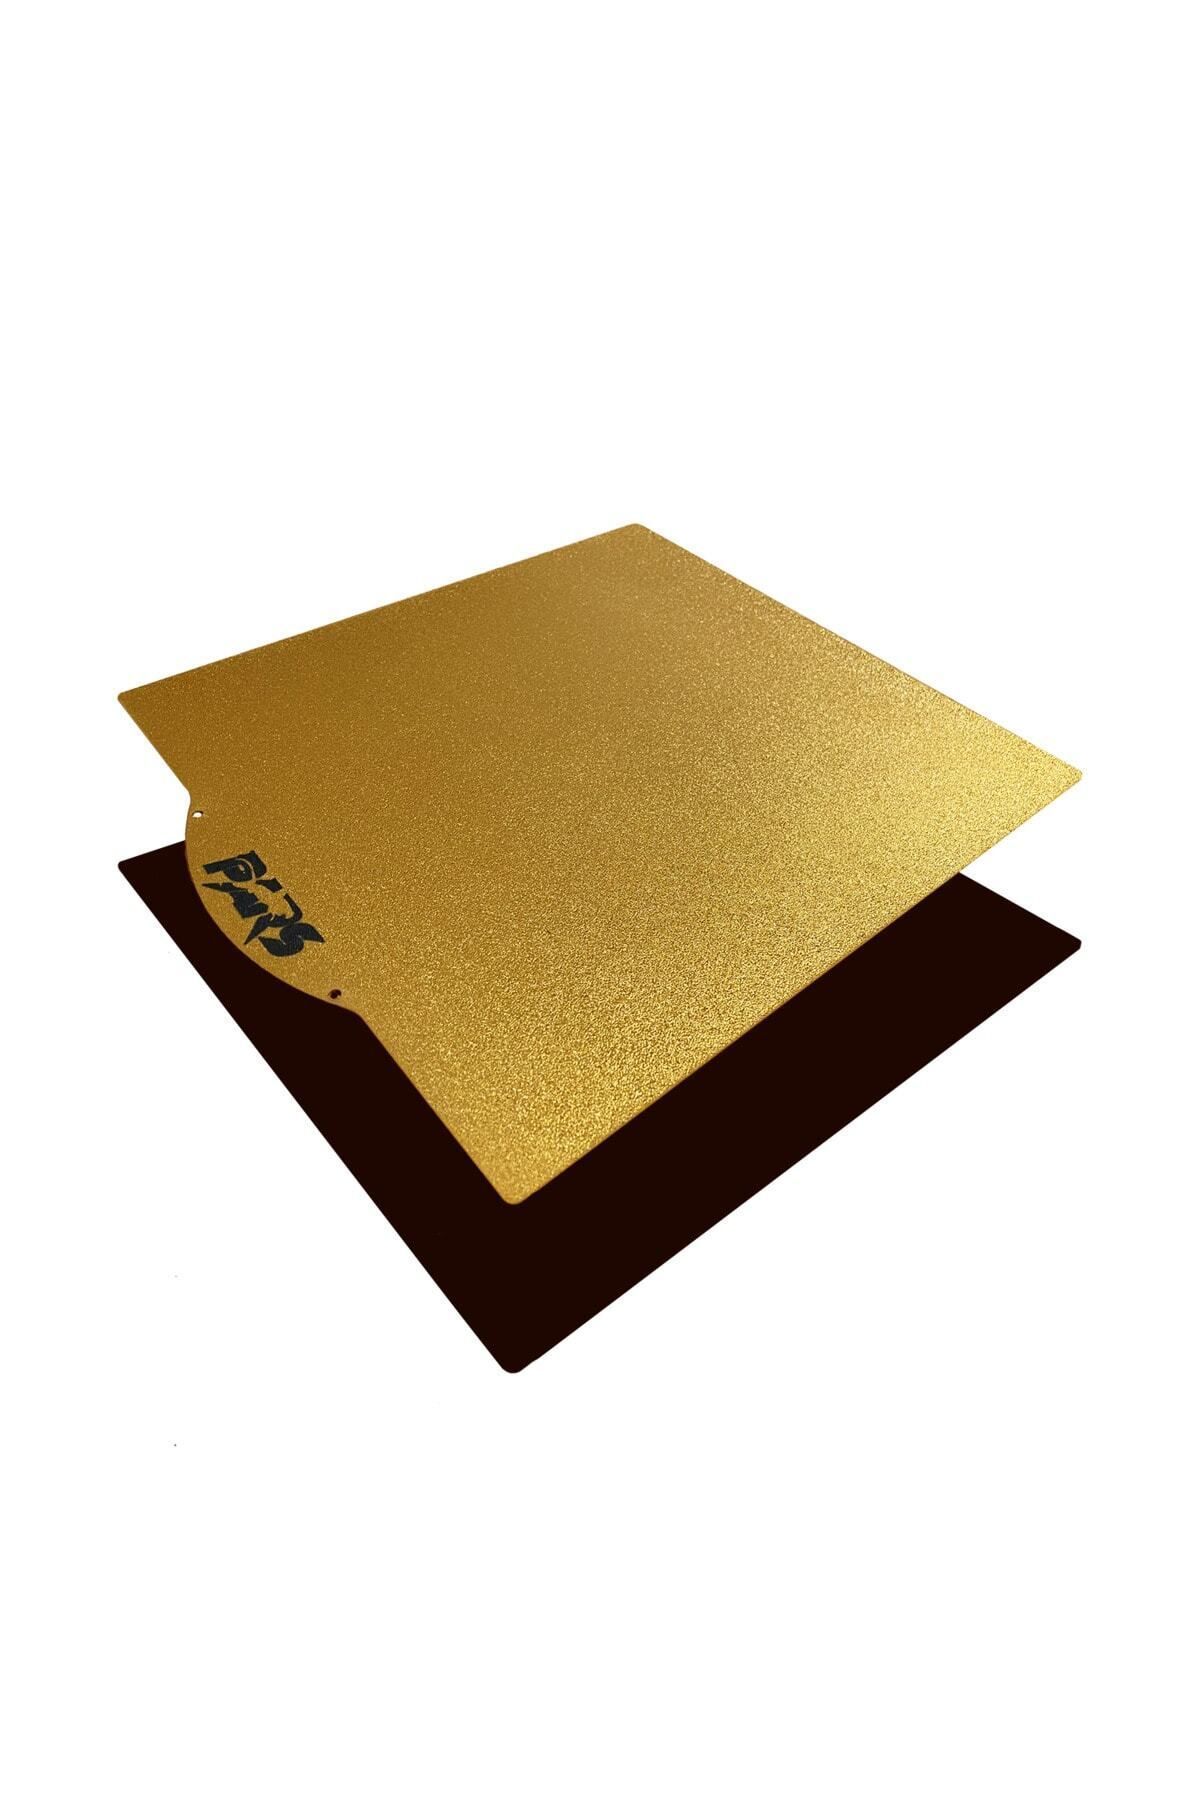 Pars 235x235 Mm Gold Pei Kaplı Özel Yay Çeliği Tabla Magnetli